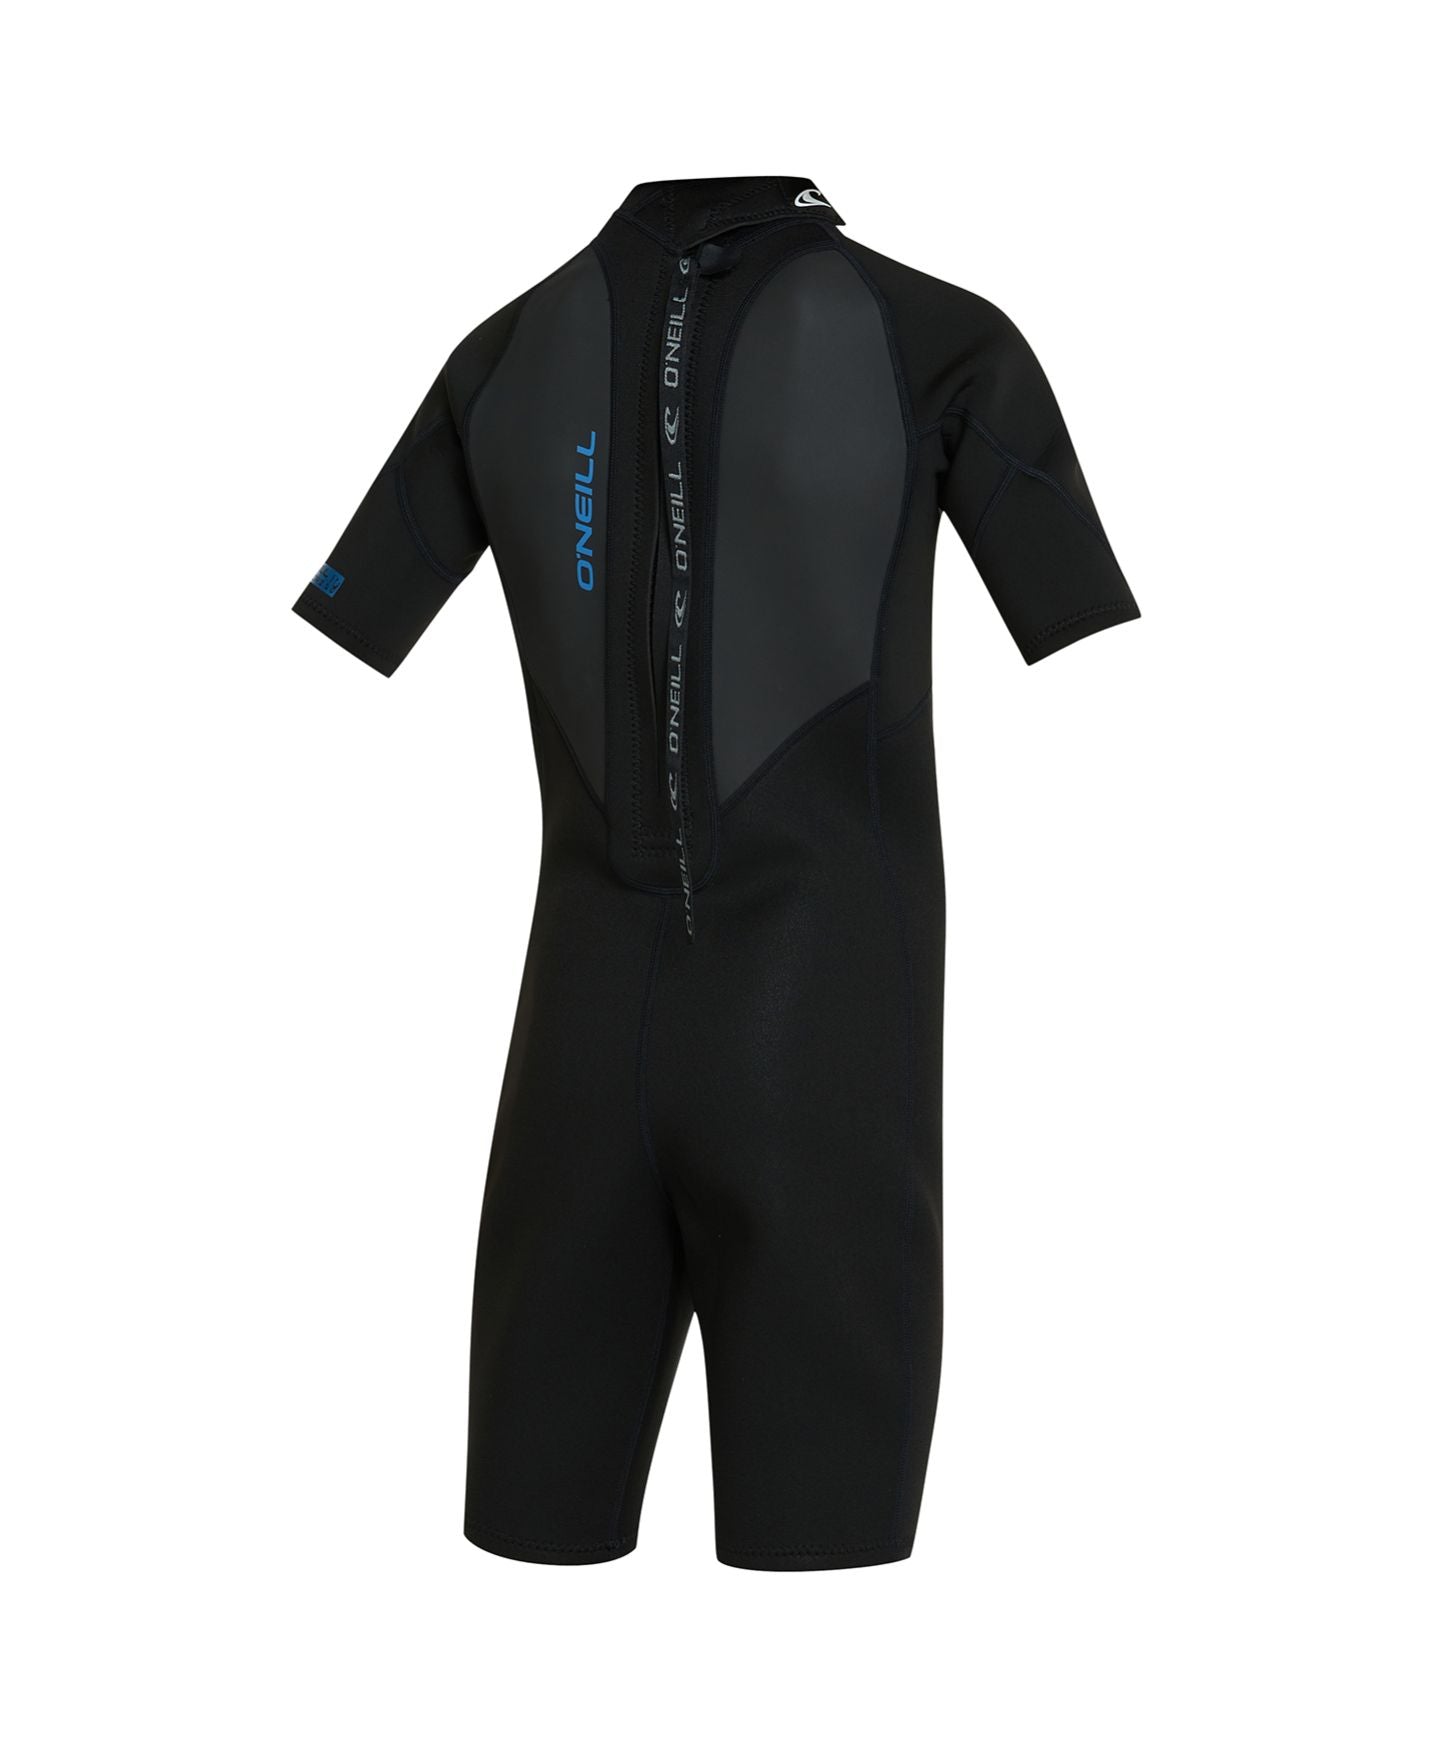 Boy's Reactor Short Sleeve Spring Suit 2mm Wetsuit - Black